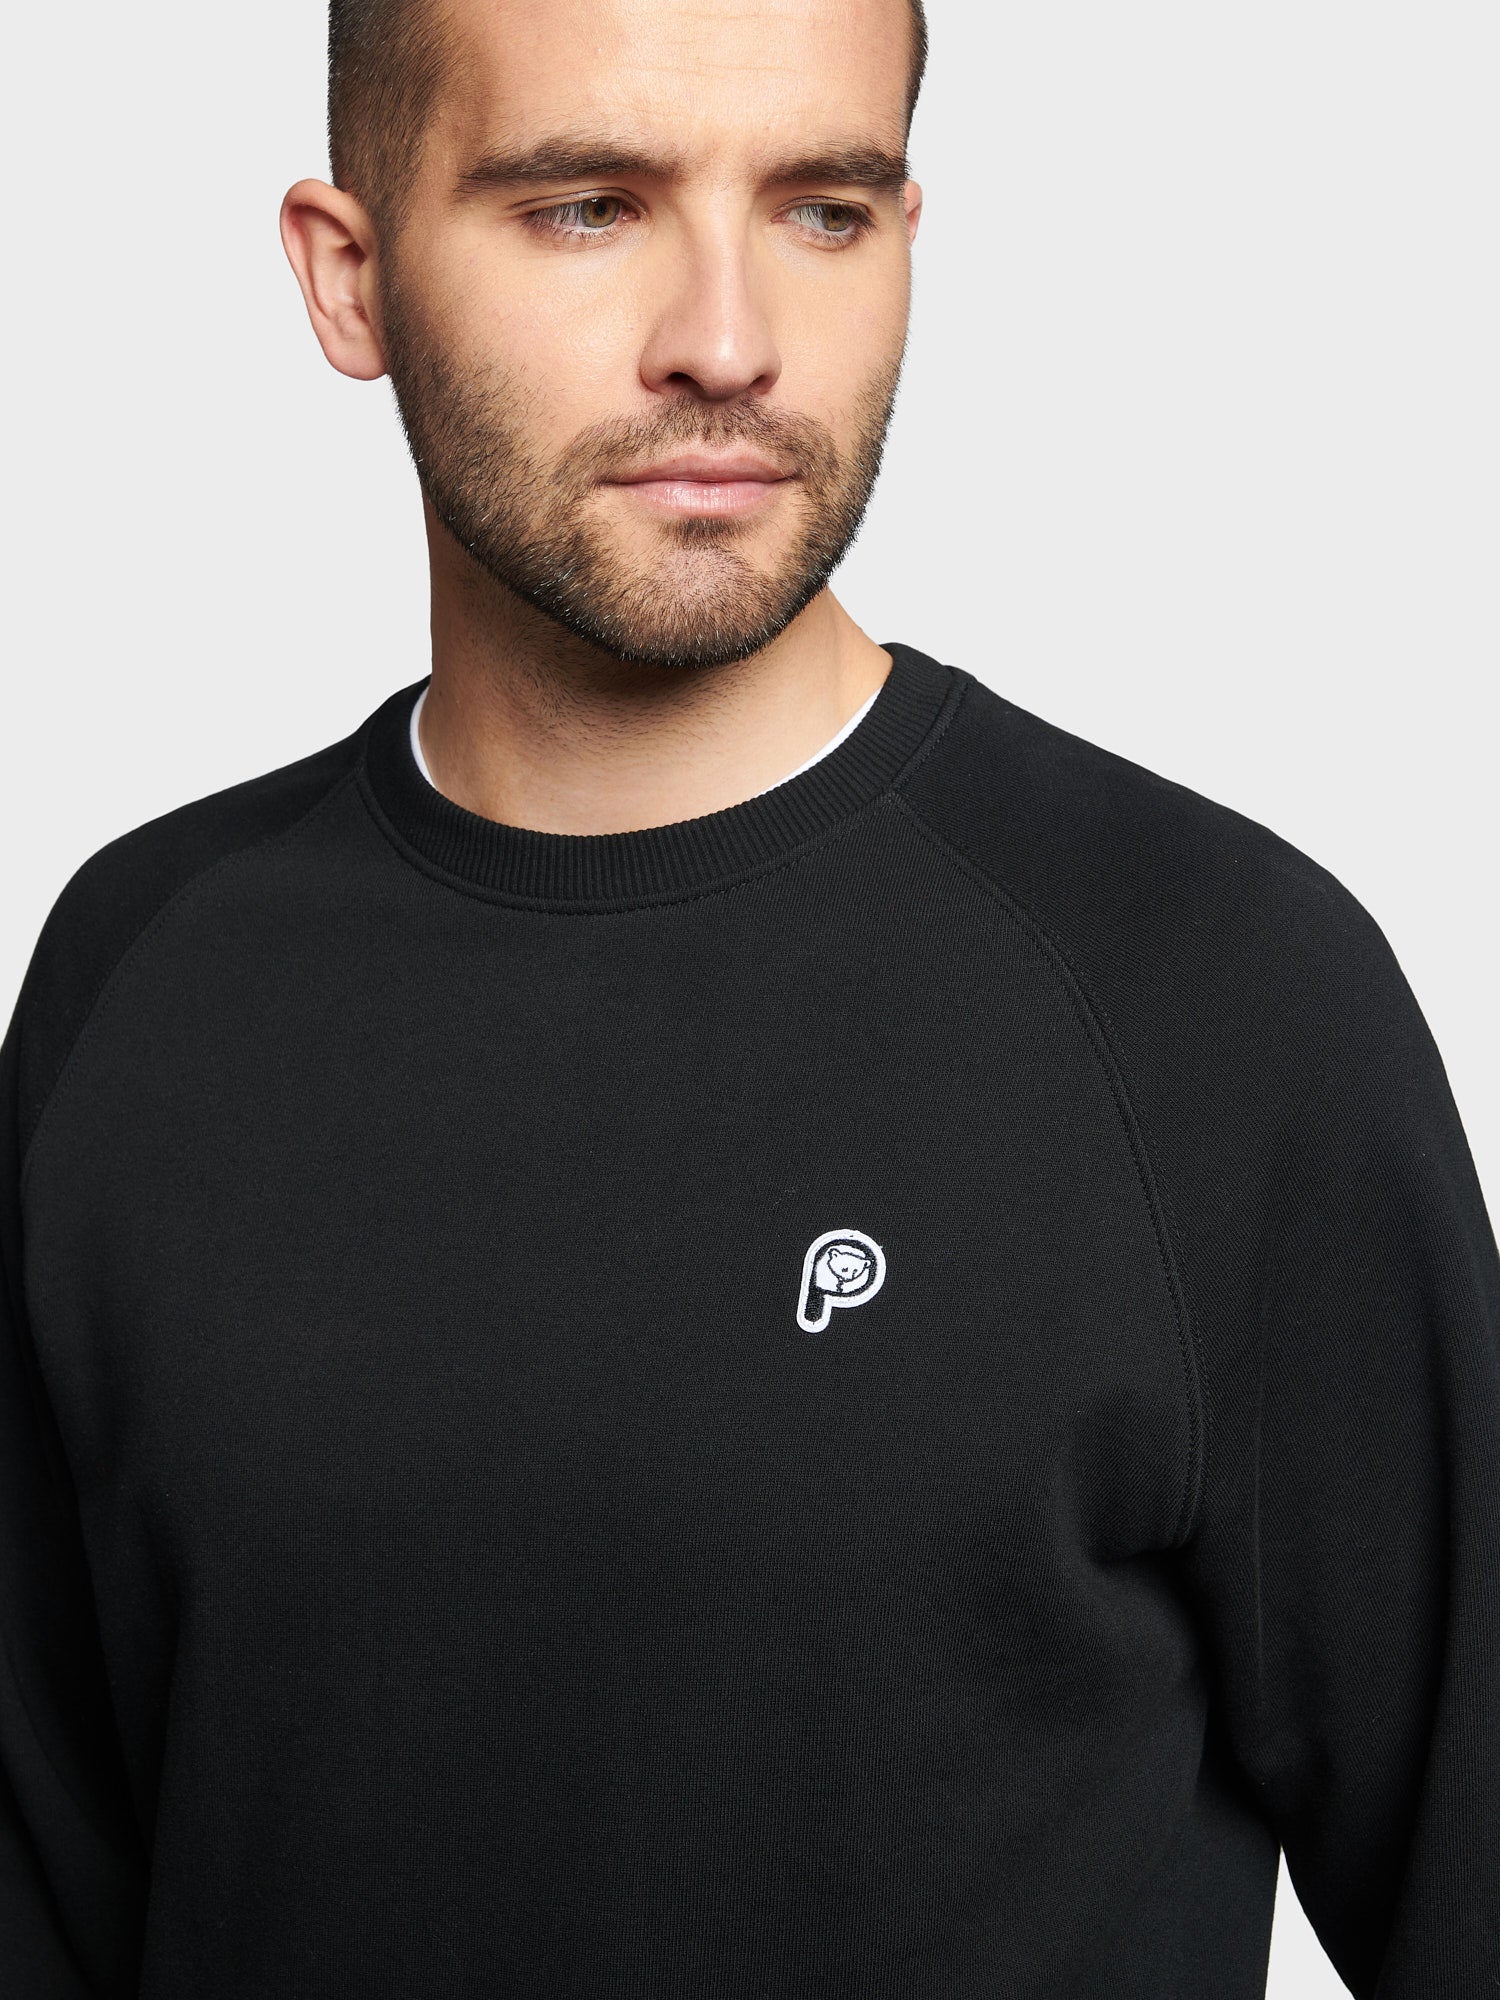 P Bear Sweater in Black